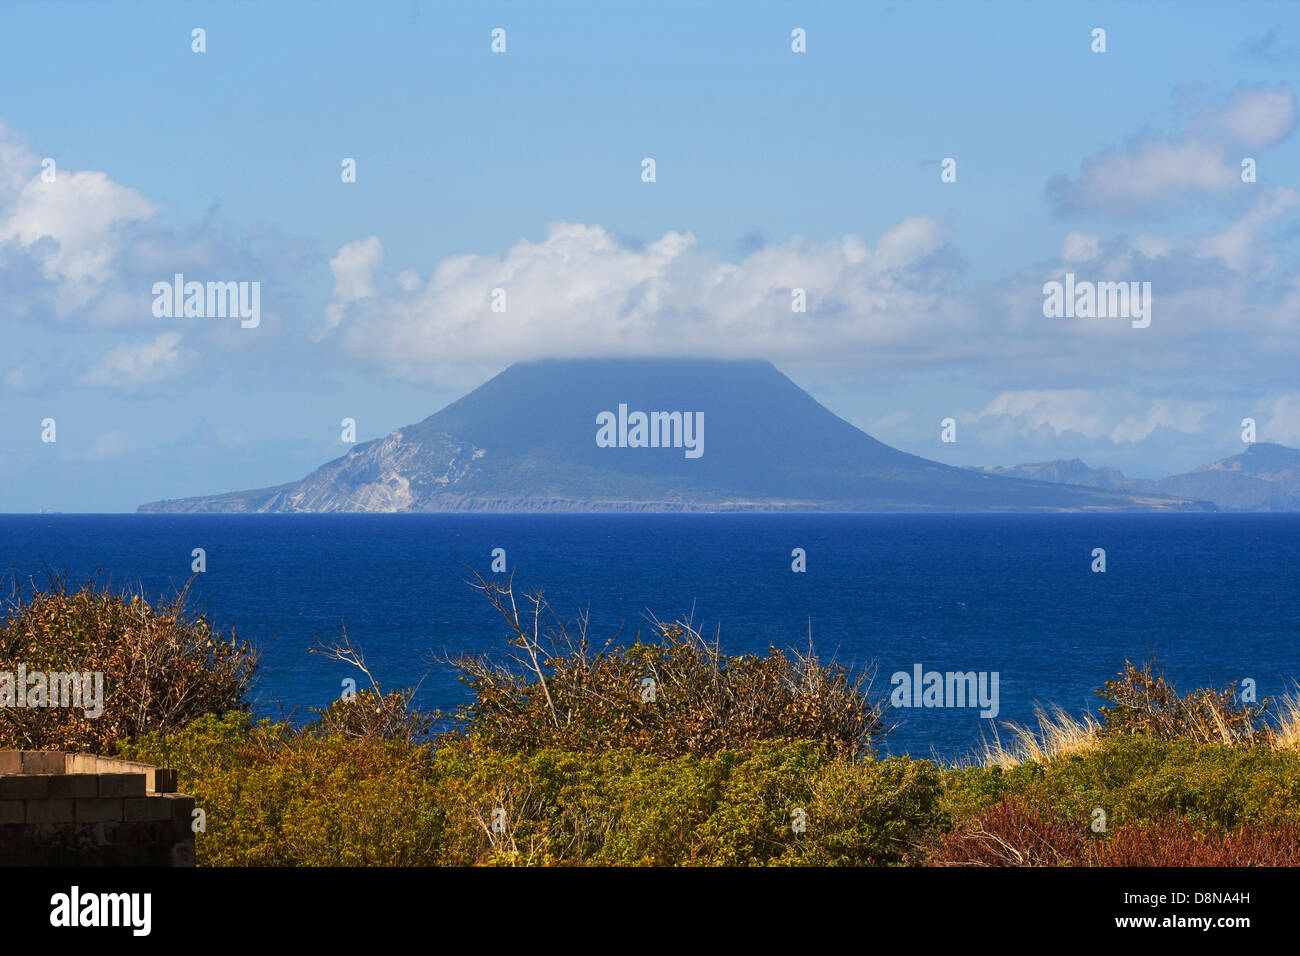 Karibikinsel Basseterre, St. Kitts und Nevis Insel in der Karibik Stockfoto